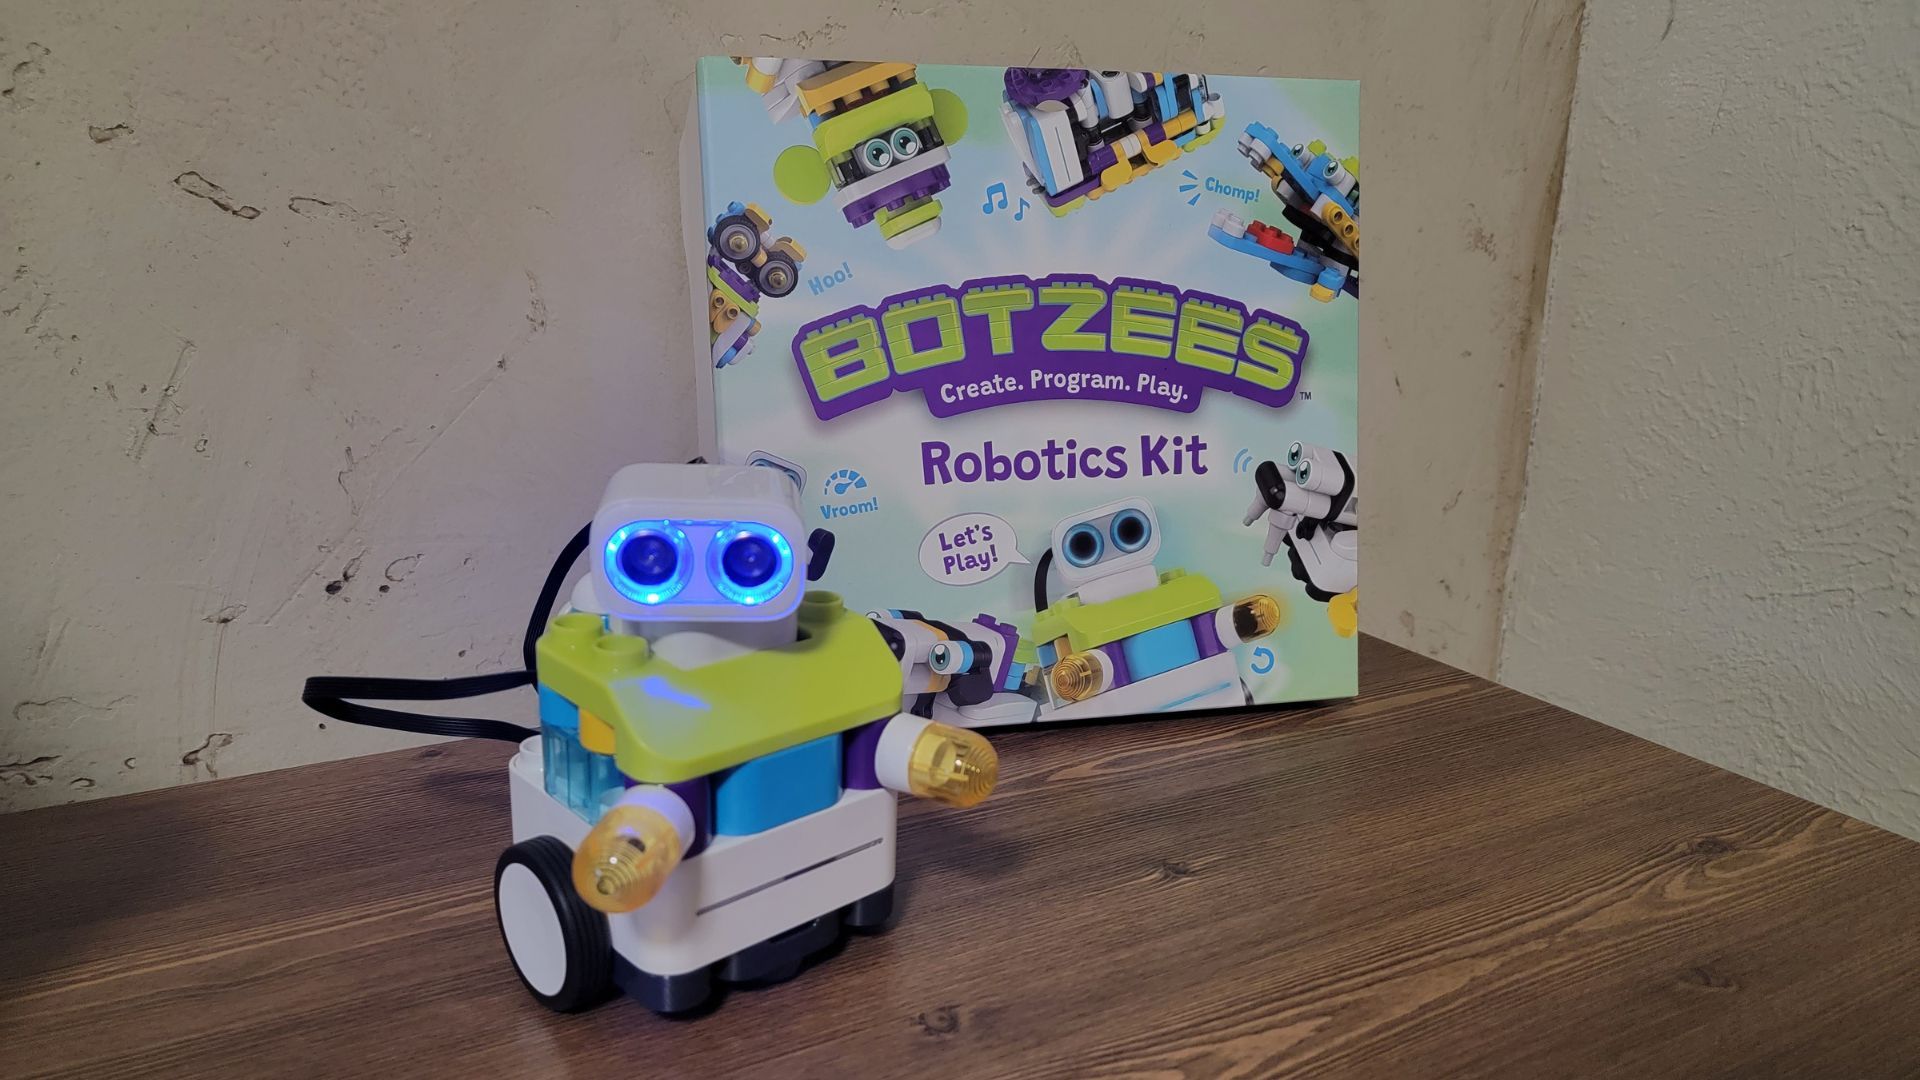 Botzees Construction Kit